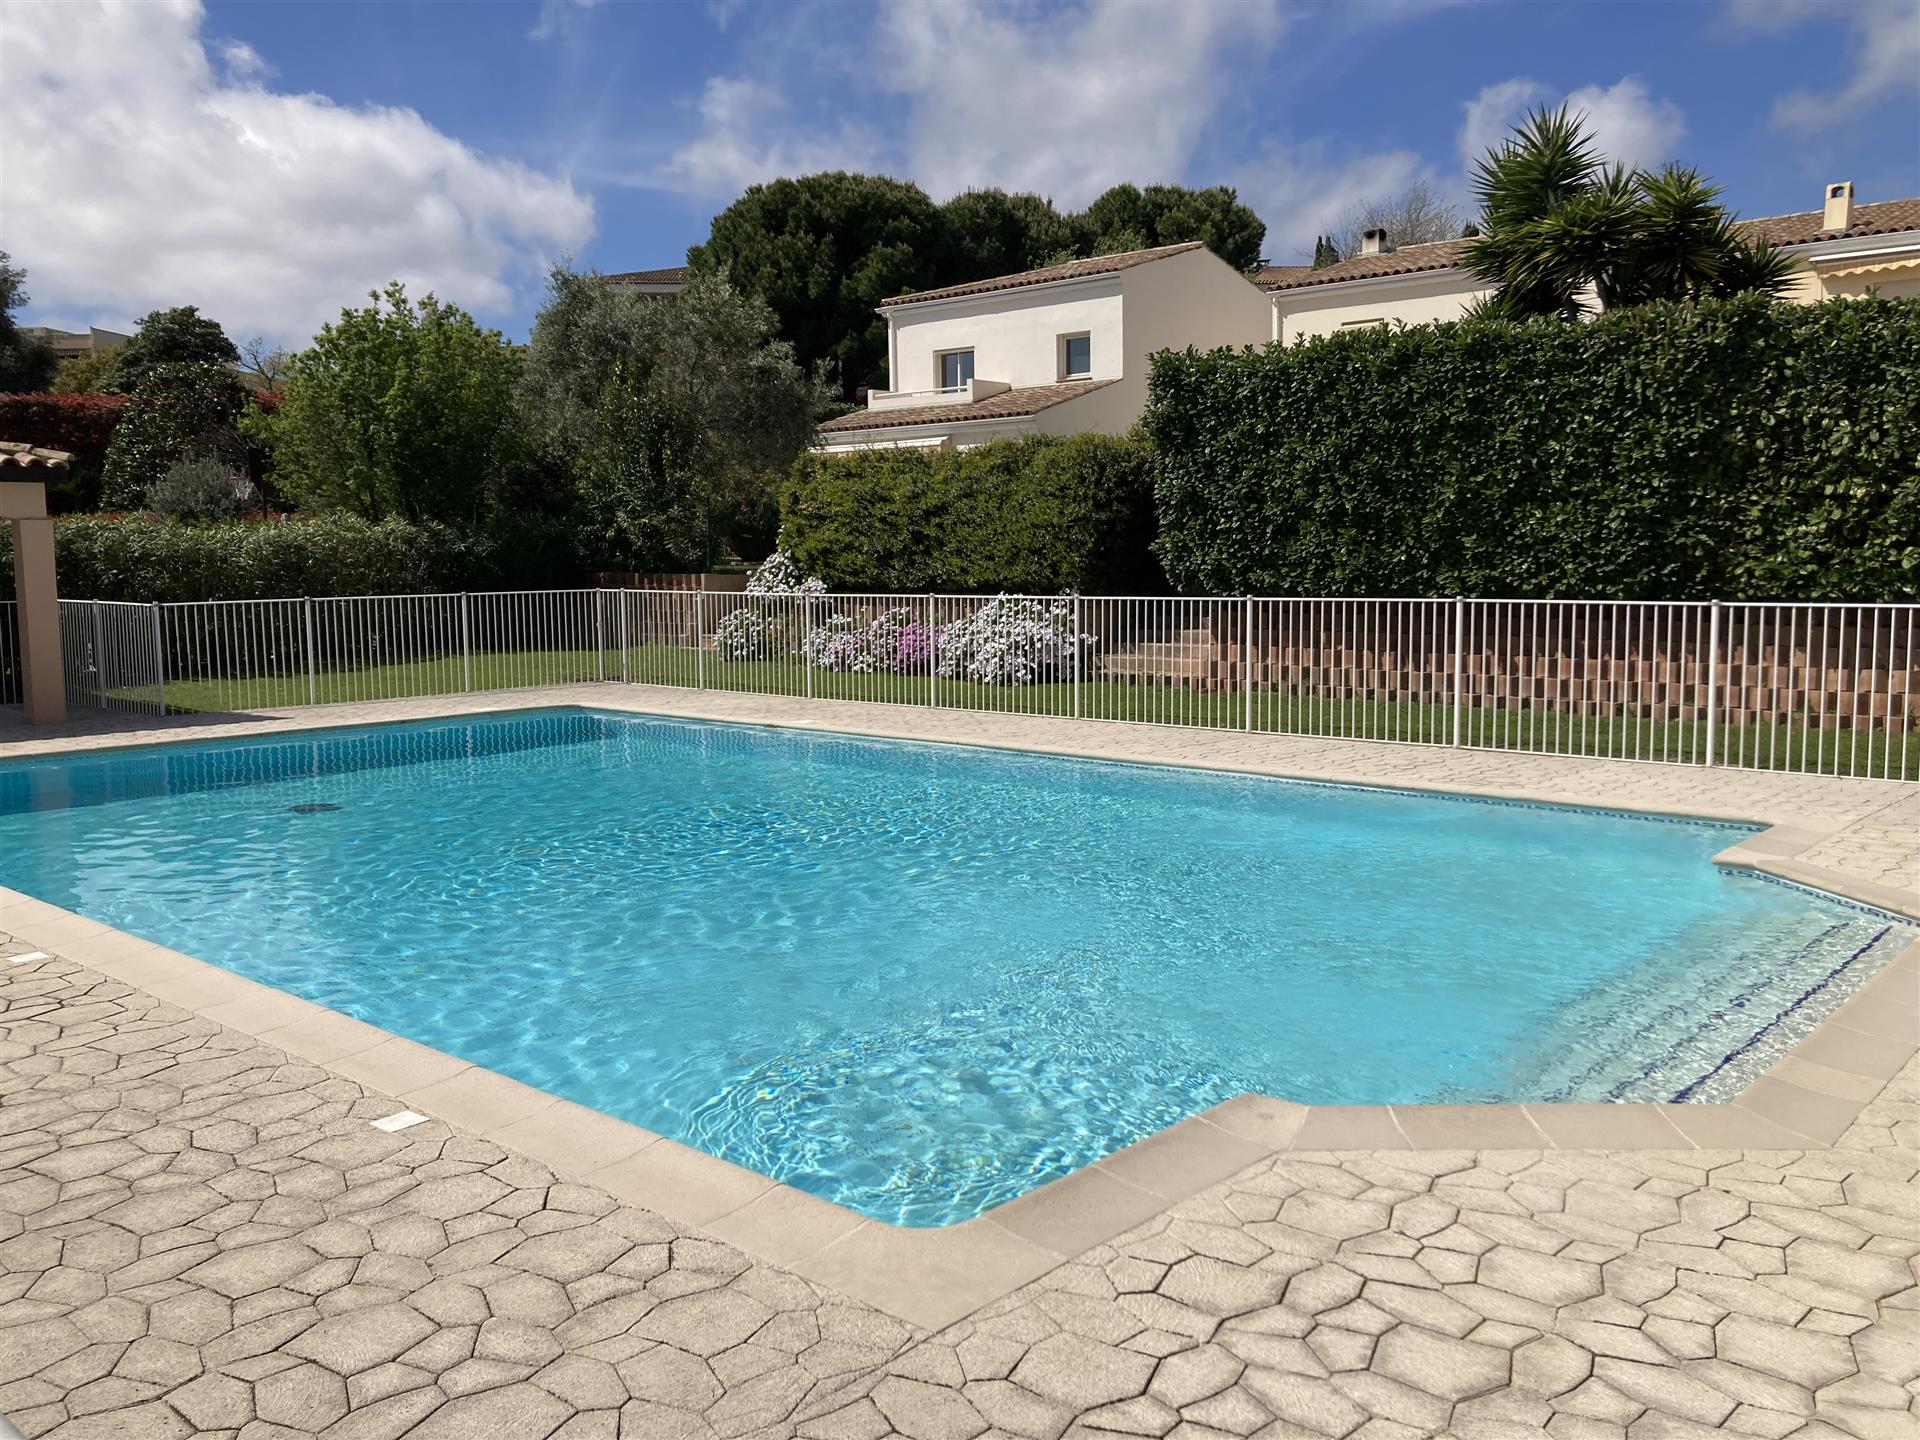 Renovated villa, luxury residence, swimming pool